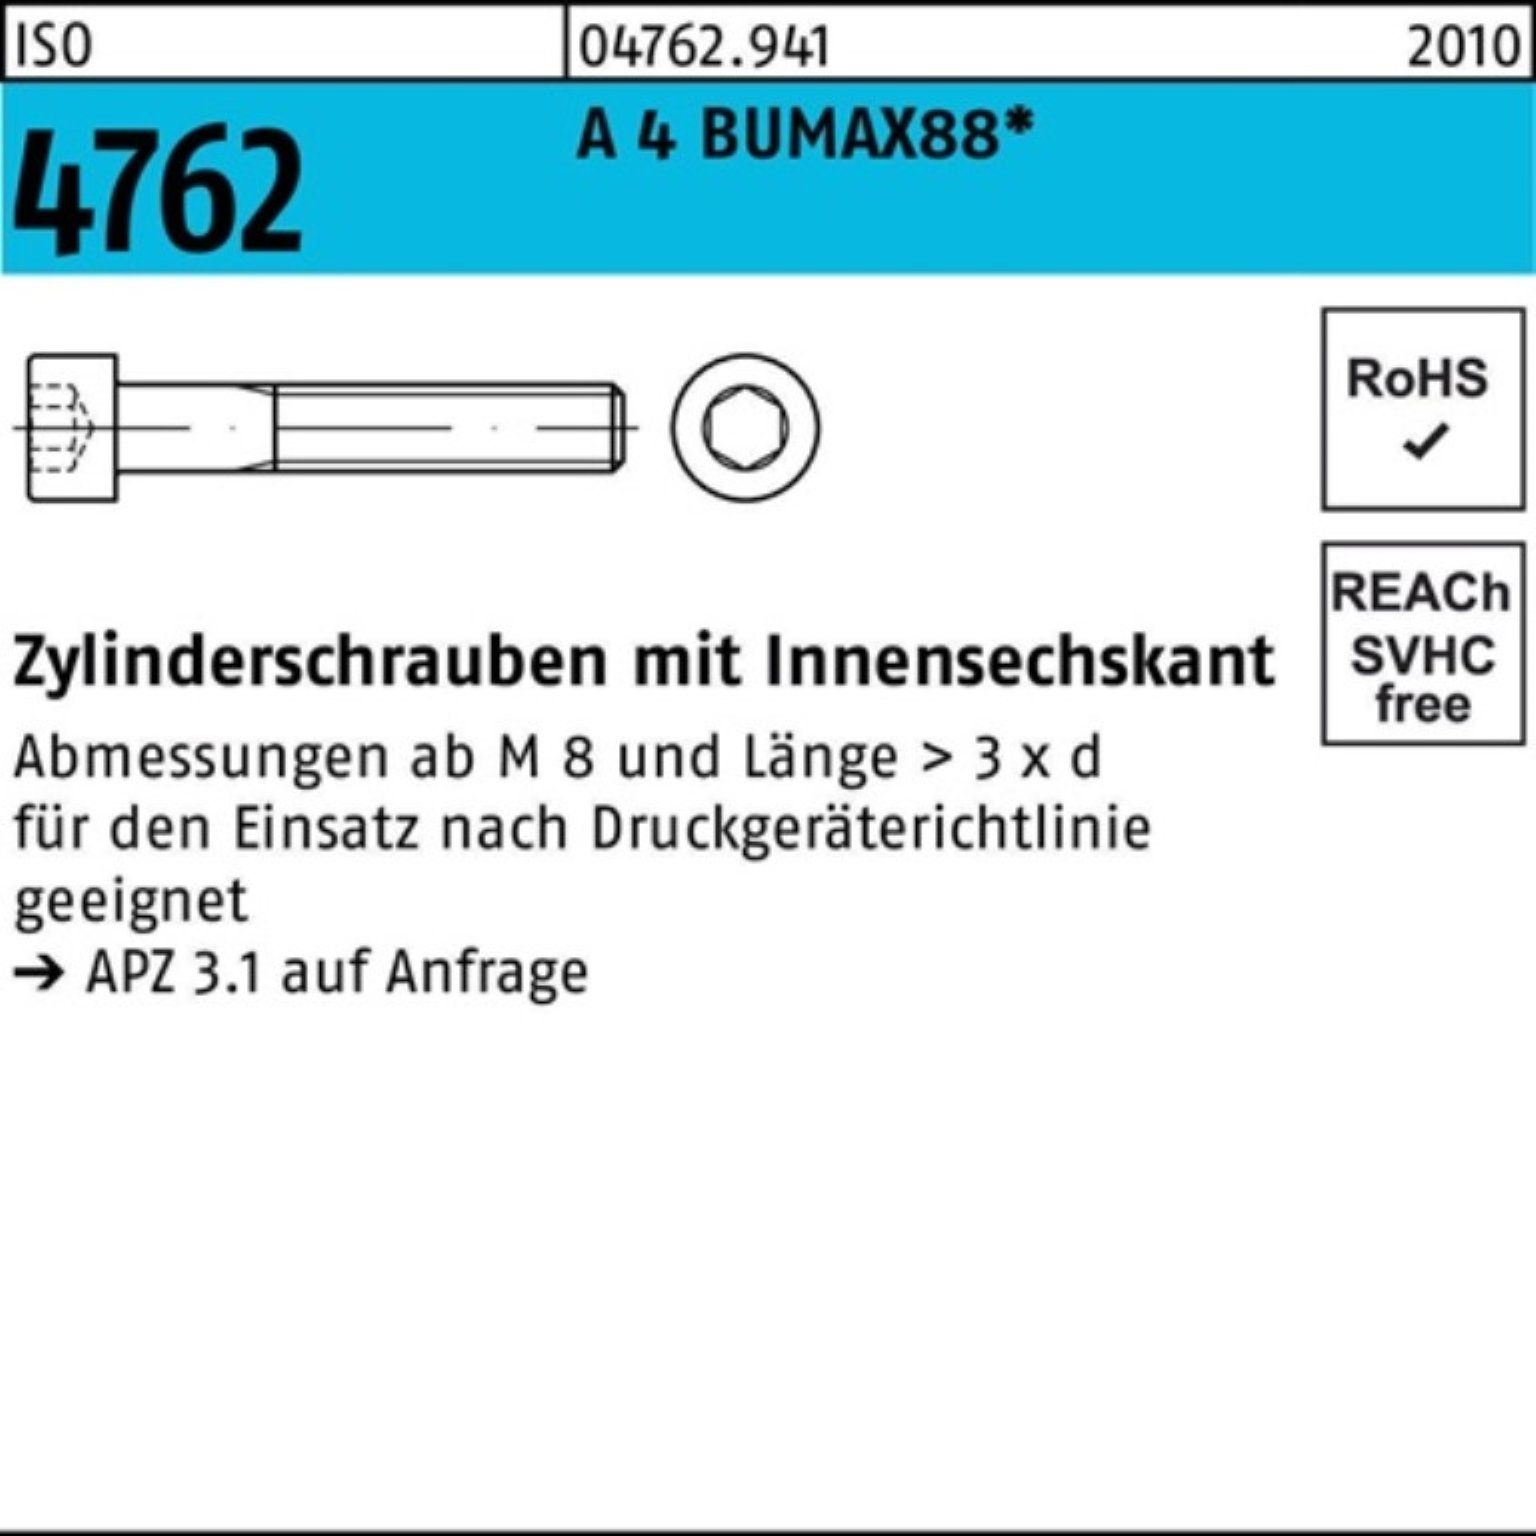 100er BUMAX88 4762 A 80 25 Pack Bufab Zylinderschraube Zylinderschraube Innen-6kt M12x ISO 4